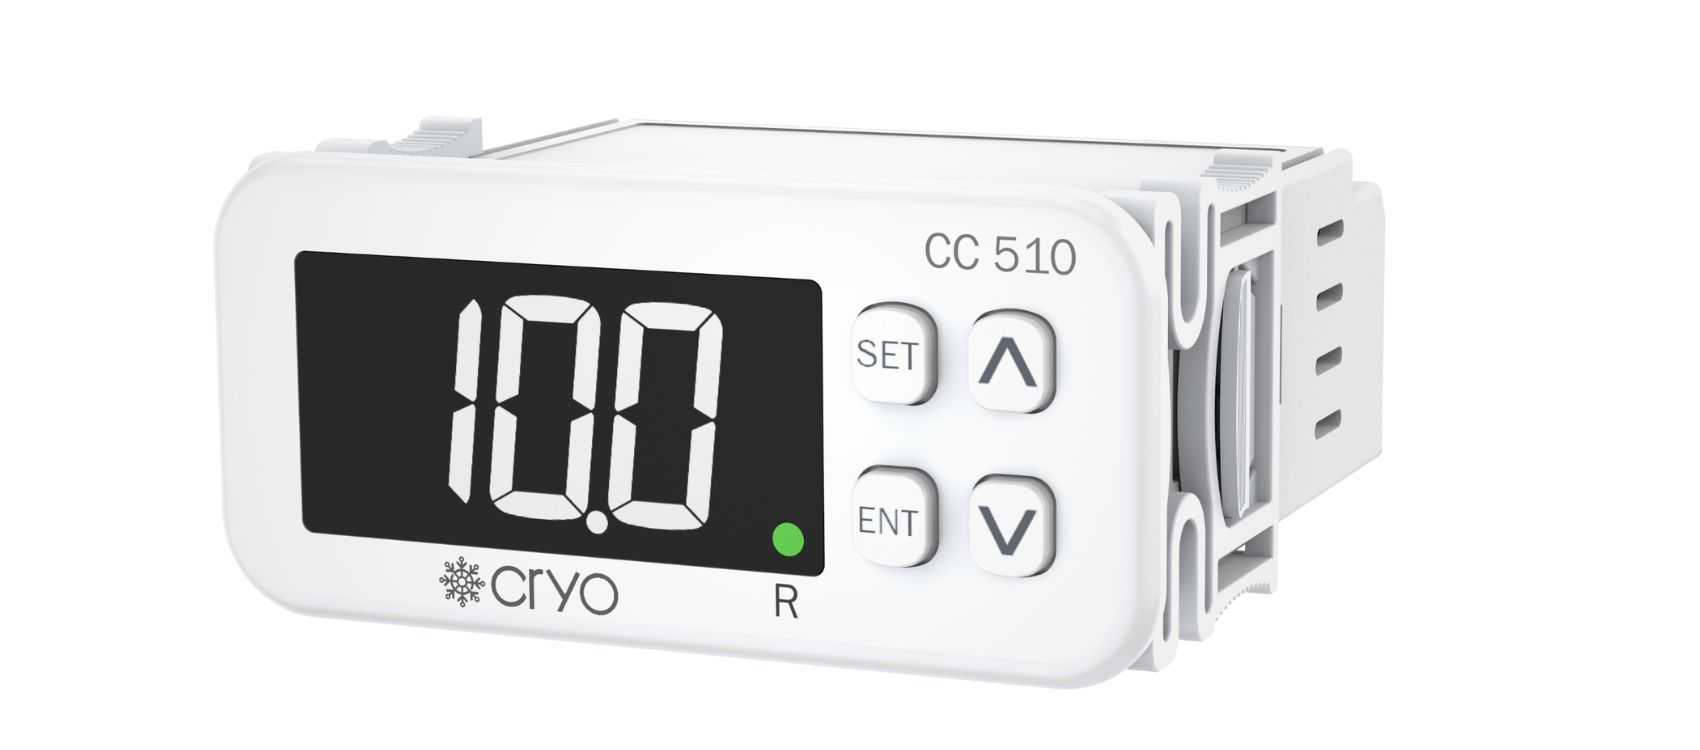 CC-510 Cryo 10A Single Output - product image